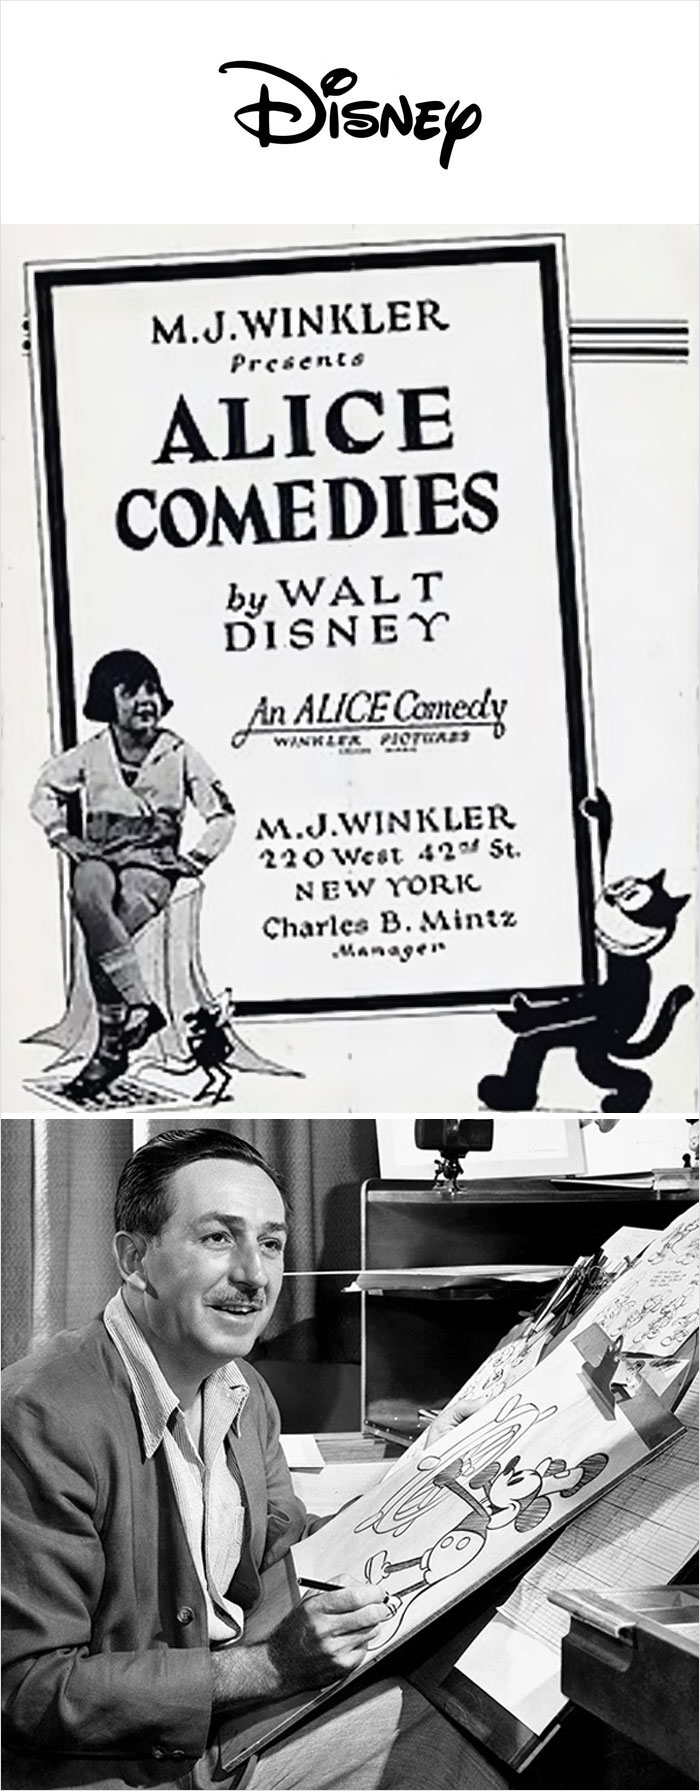 Animation "Alice Comedies" (1923)